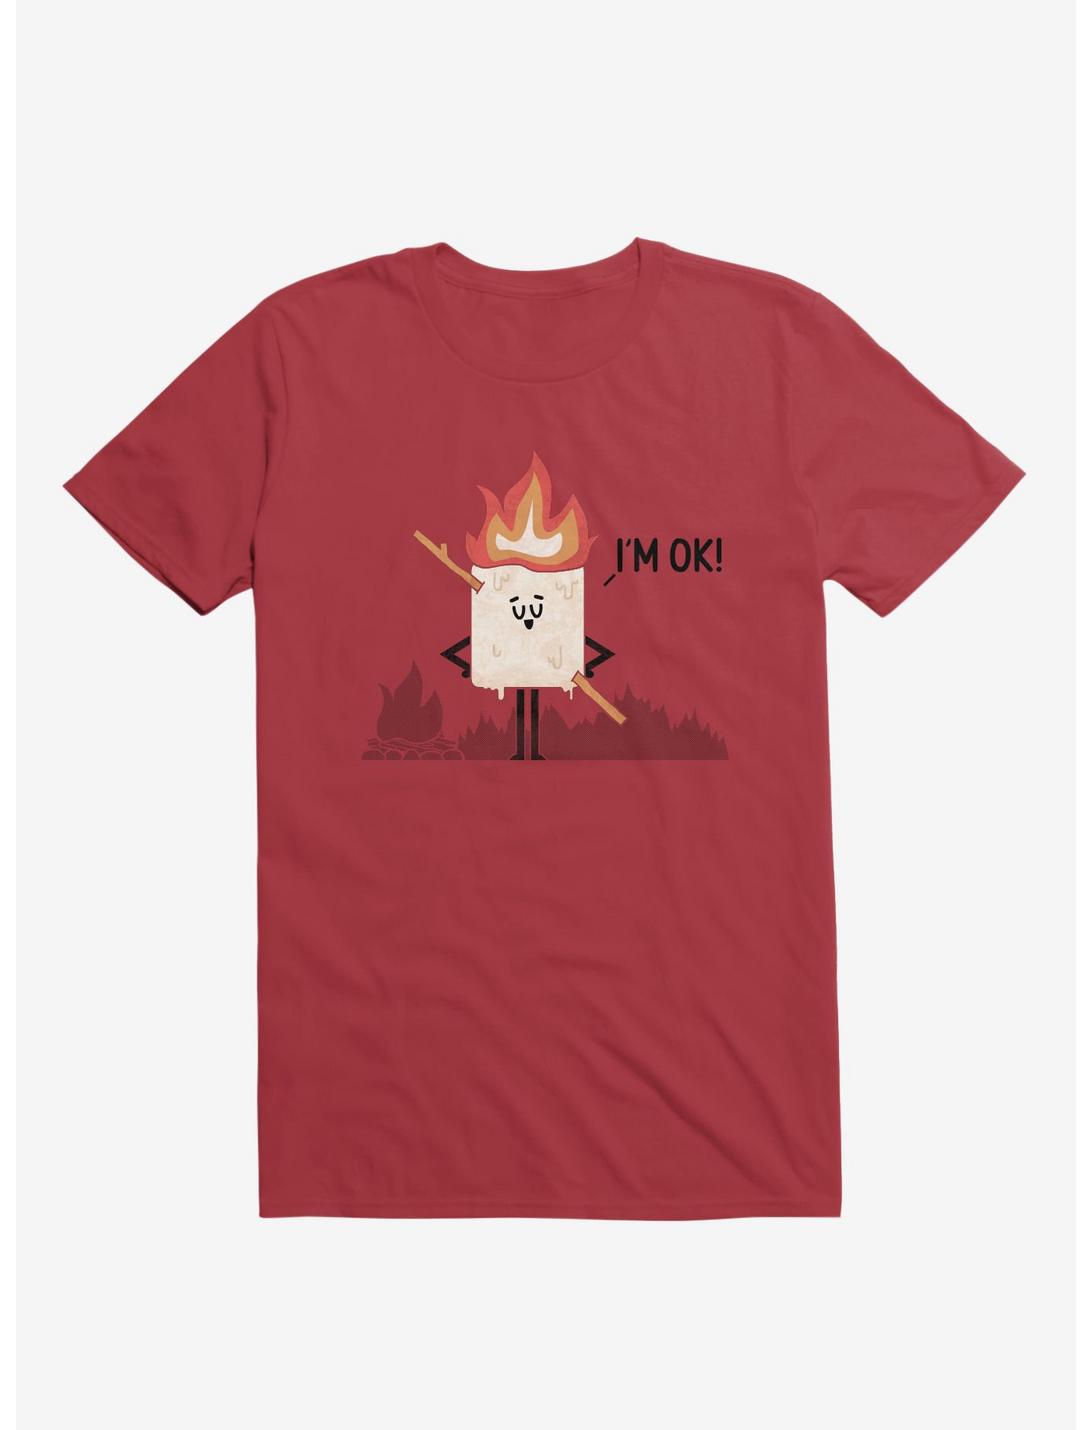 I'm OK! Campfire S'more Red T-Shirt, RED, hi-res